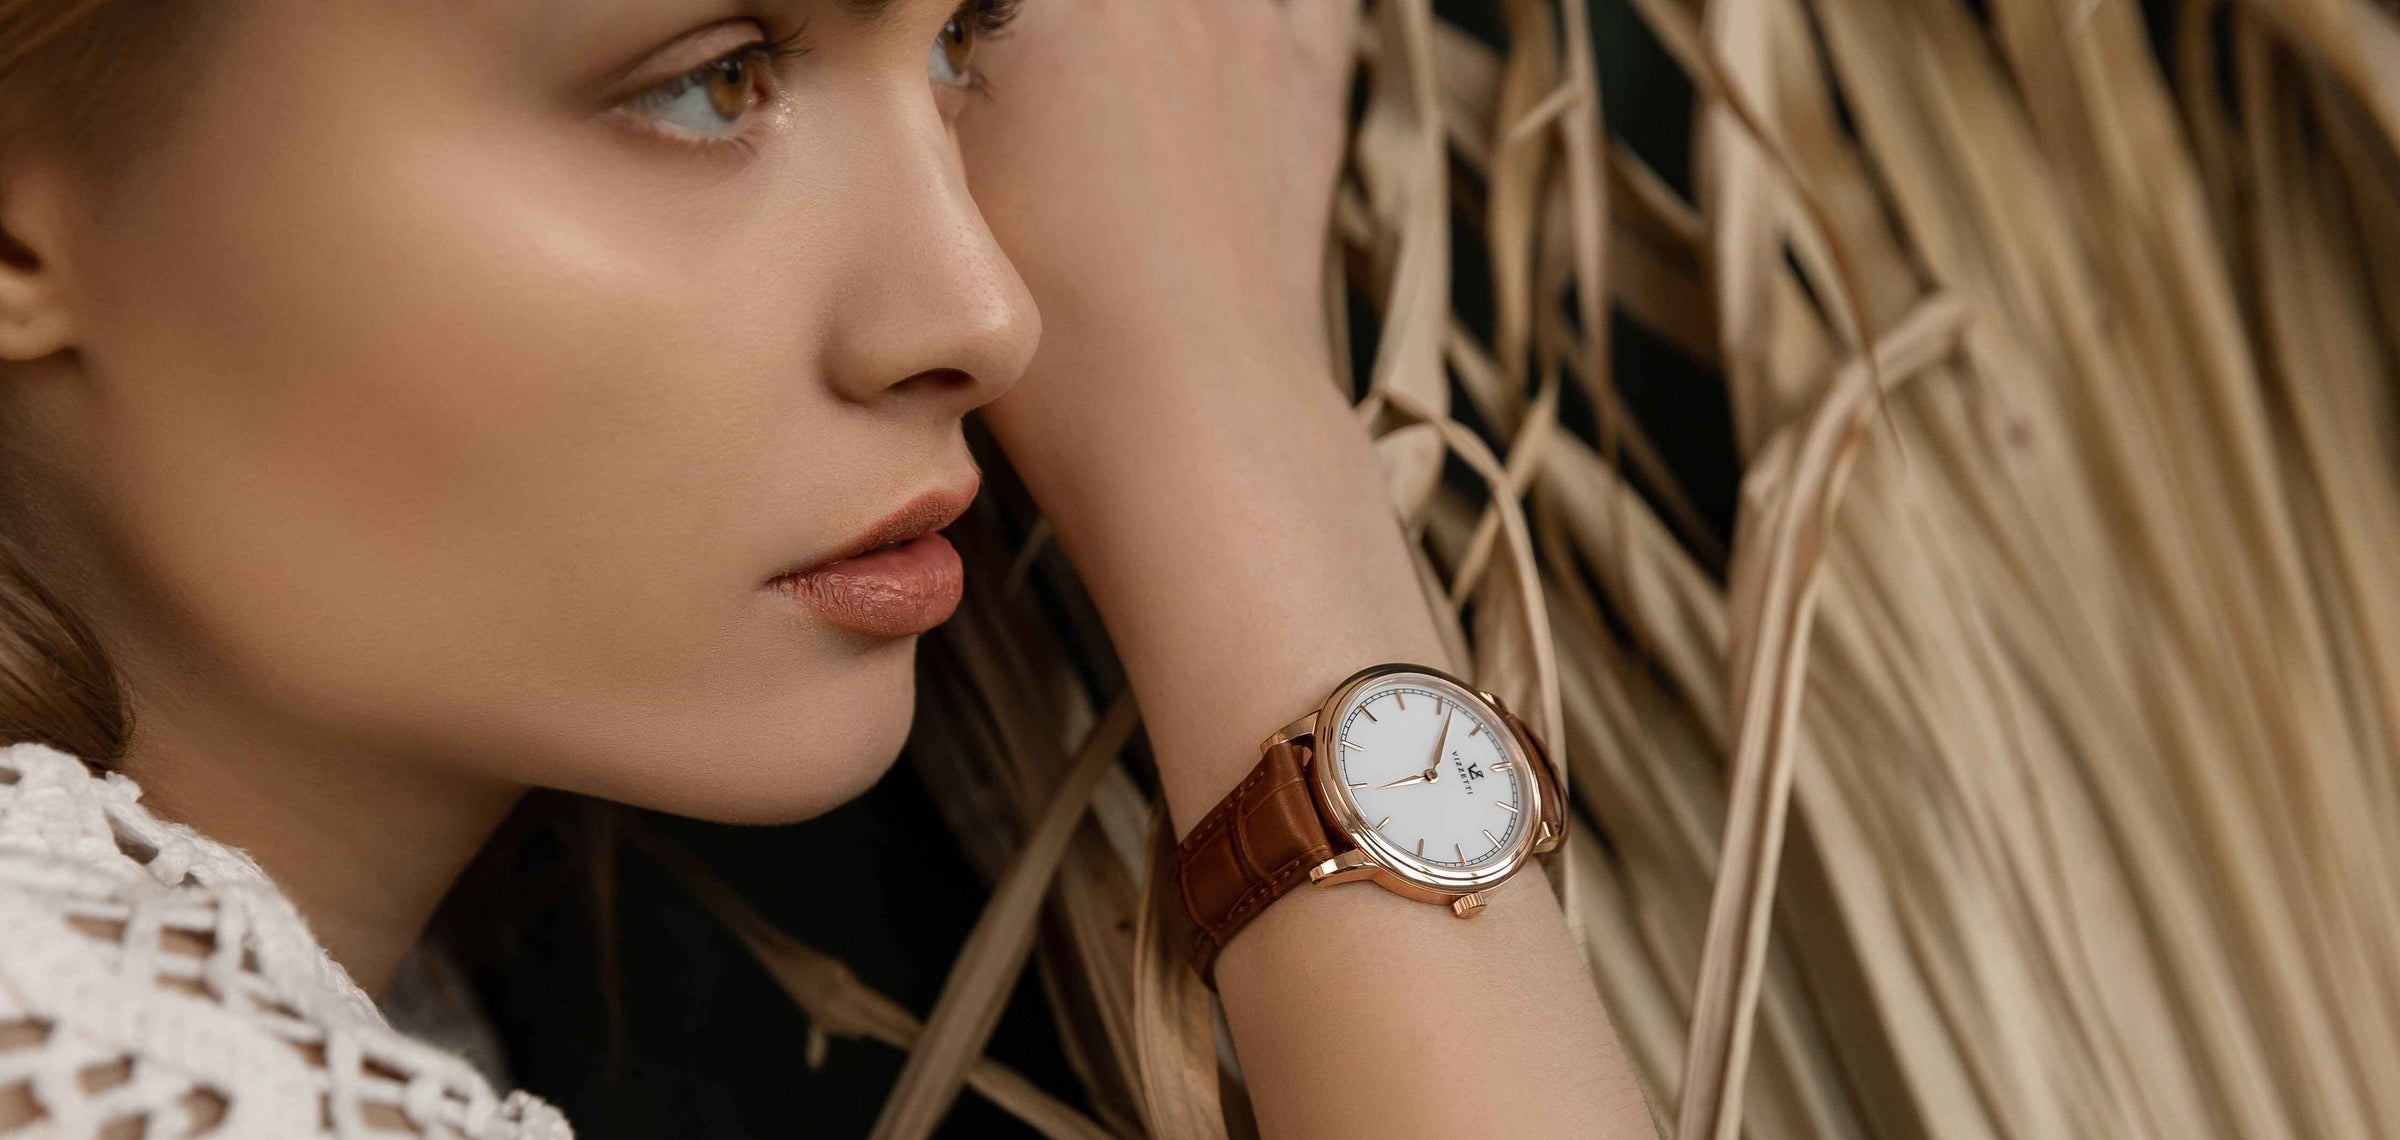 A model for Vizzetti showcasing a Vizzetti watch on her wrist.